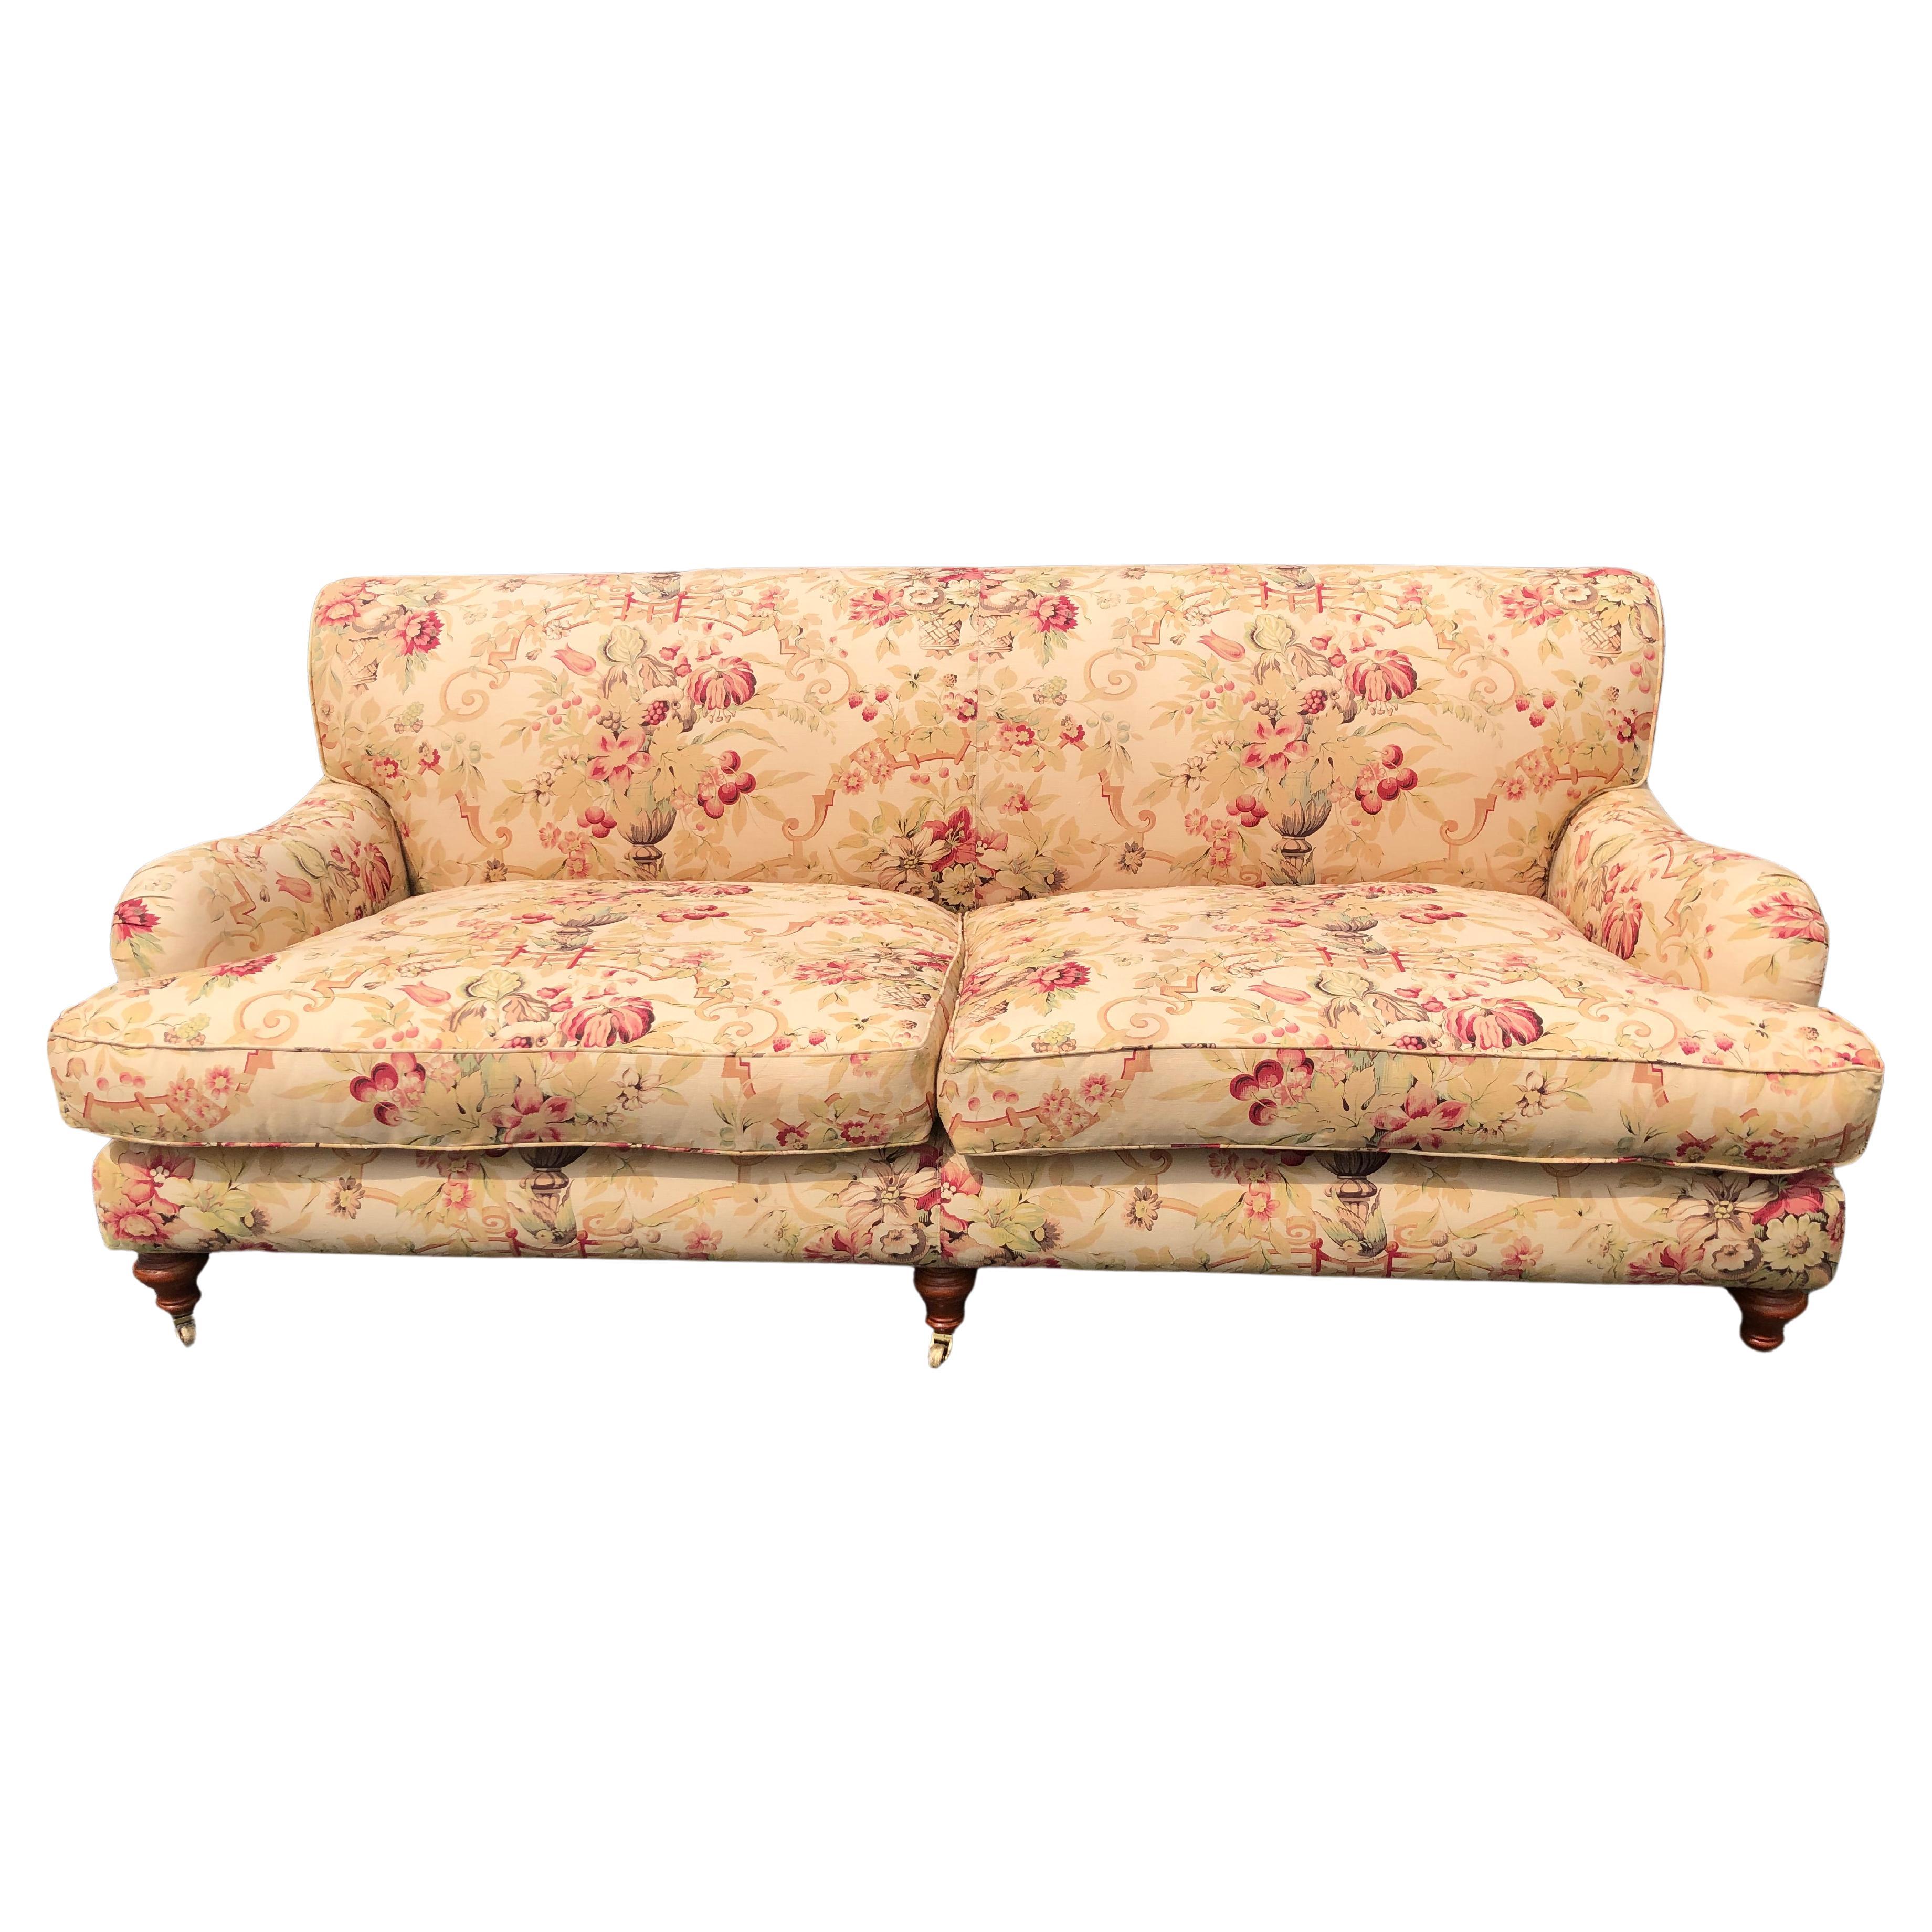 Extra Large Plush George Smith Signature Scroll Arm English Upholstered Sofa